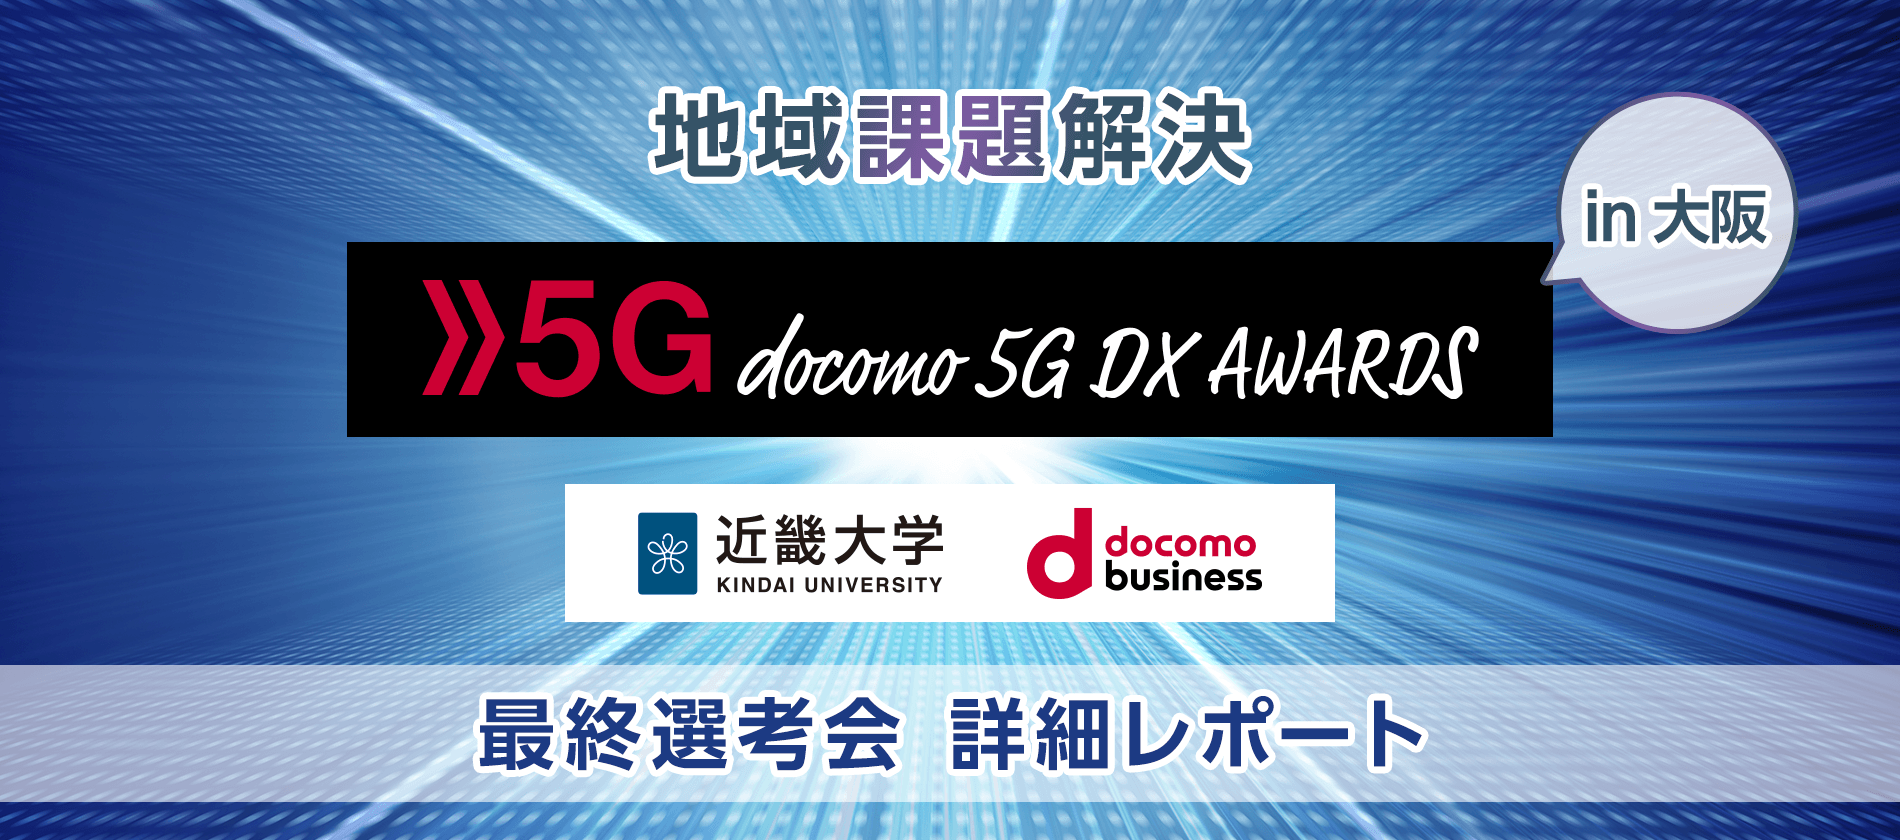 地域課題解決 5G docomo 5G DX AWARDS in大阪 最終選考会 詳細レポート